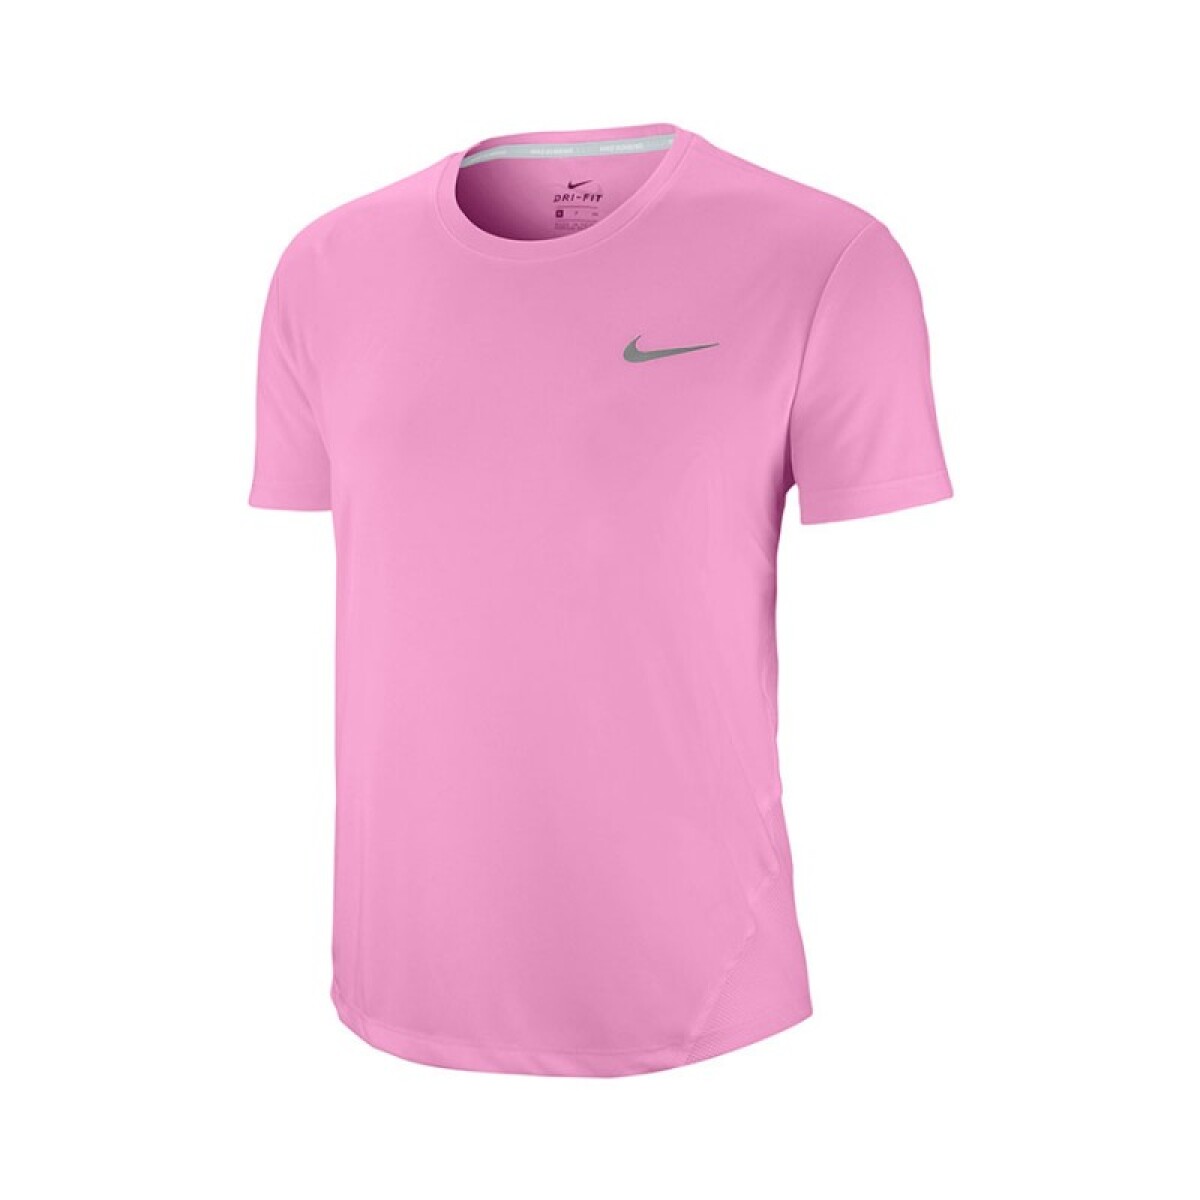 Remera Nike Running Dama Miler Top SS Beyond Pink/Reflective Silv - Color Único 